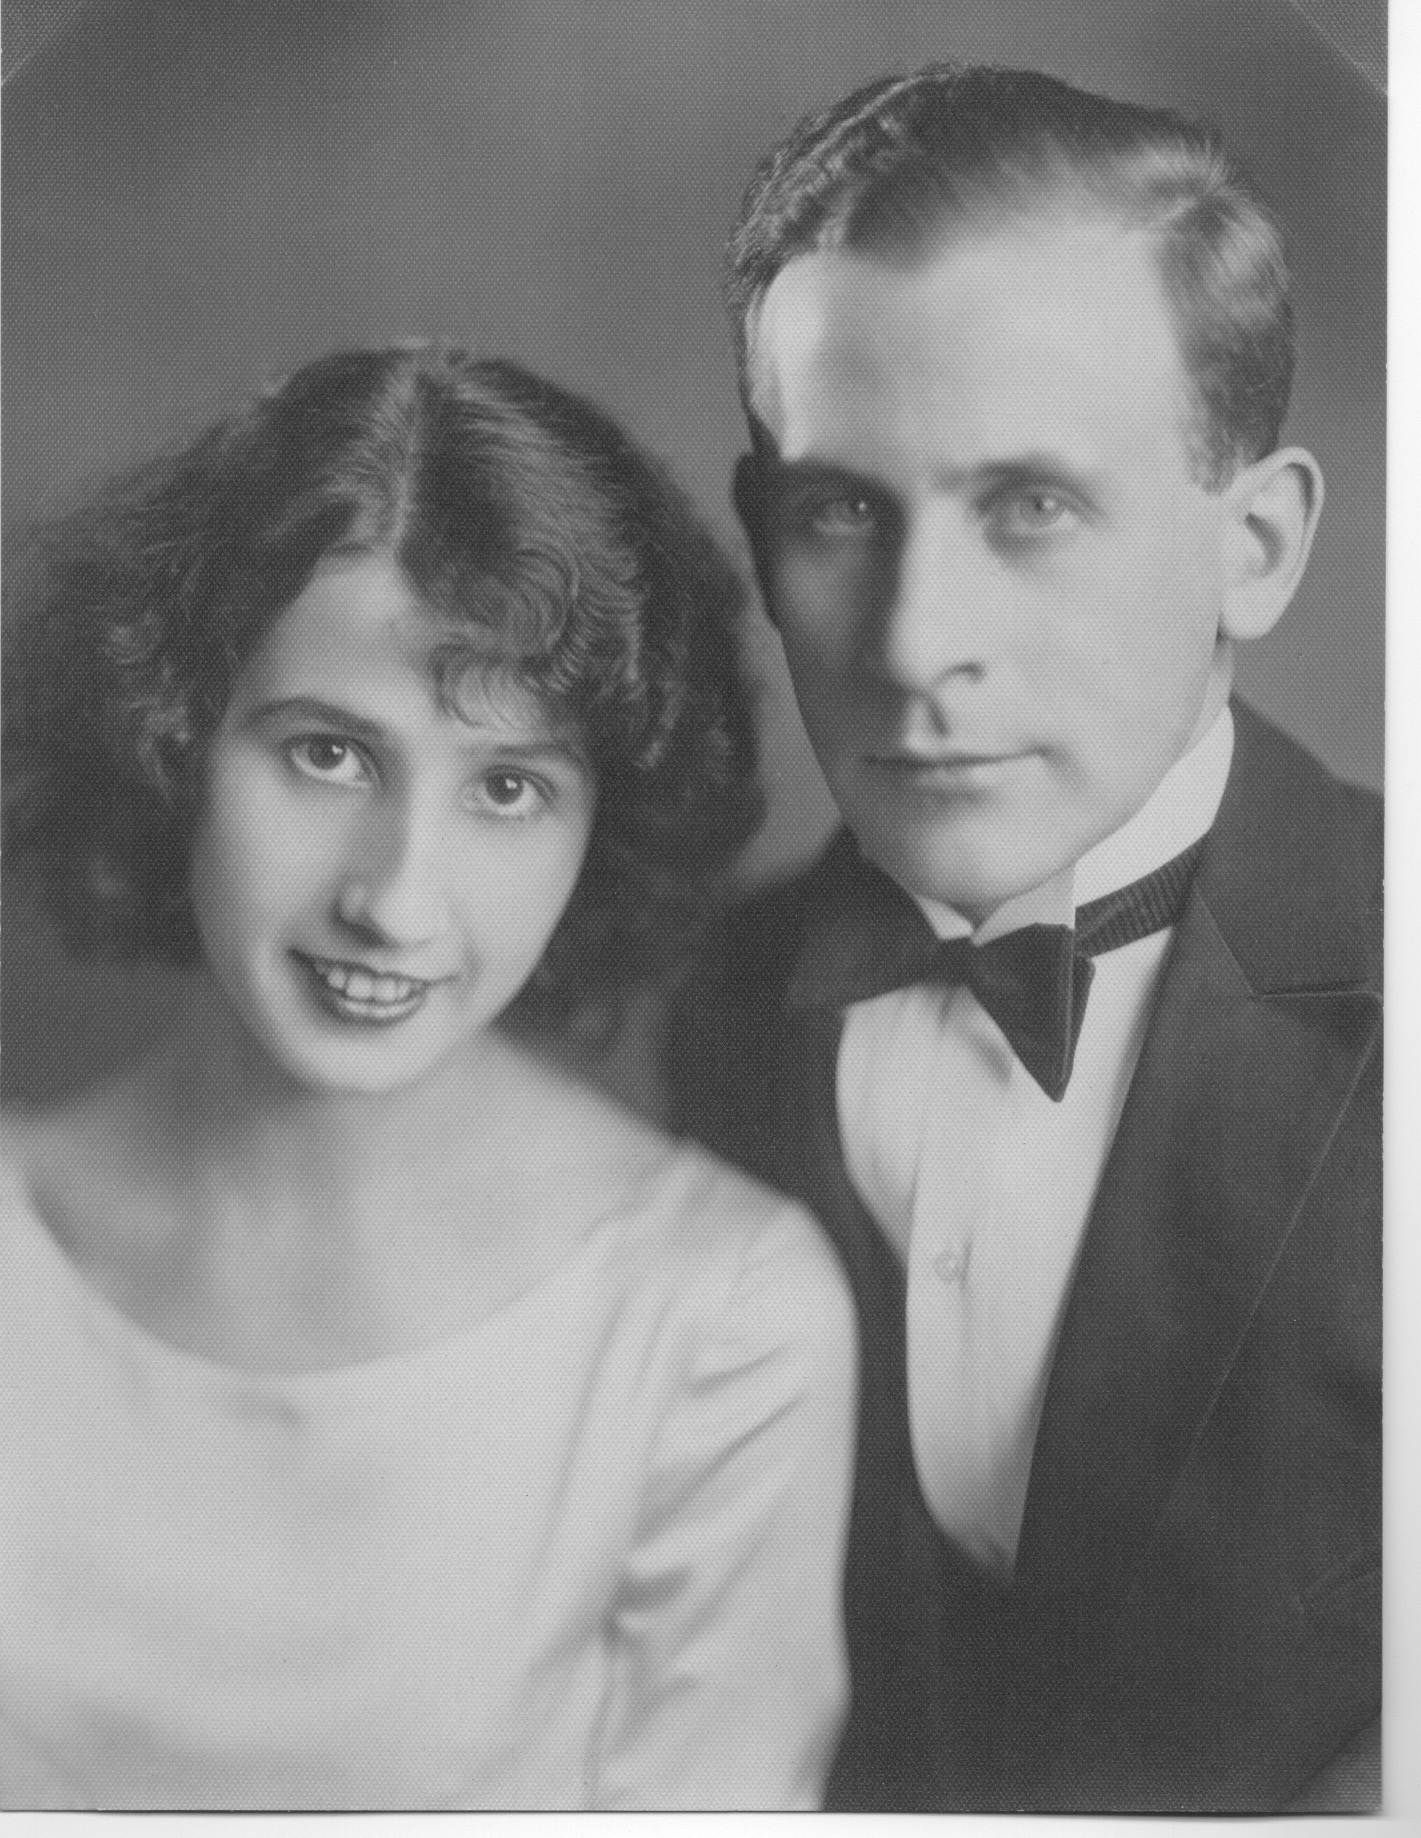 Banzhaf wedding day 31 Aug 1929.NYC